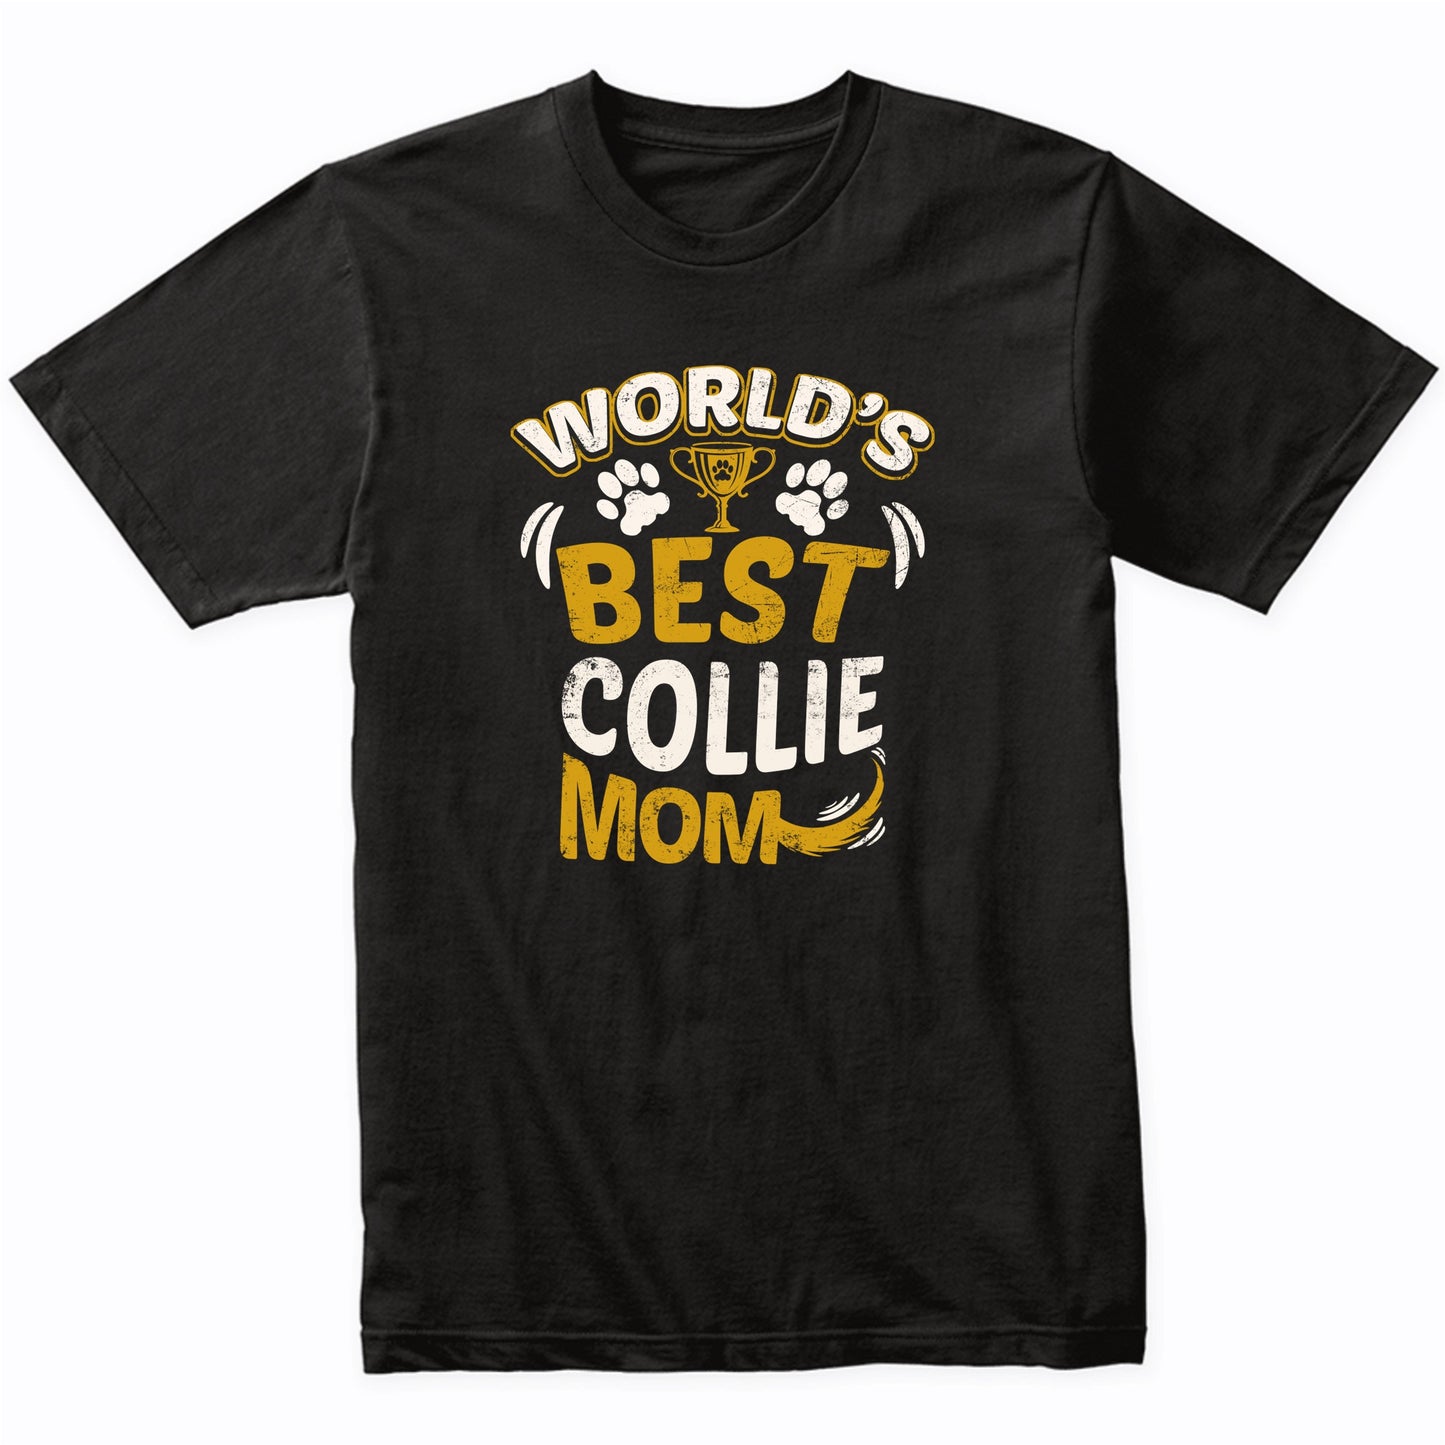 World's Best Collie Mom Graphic T-Shirt